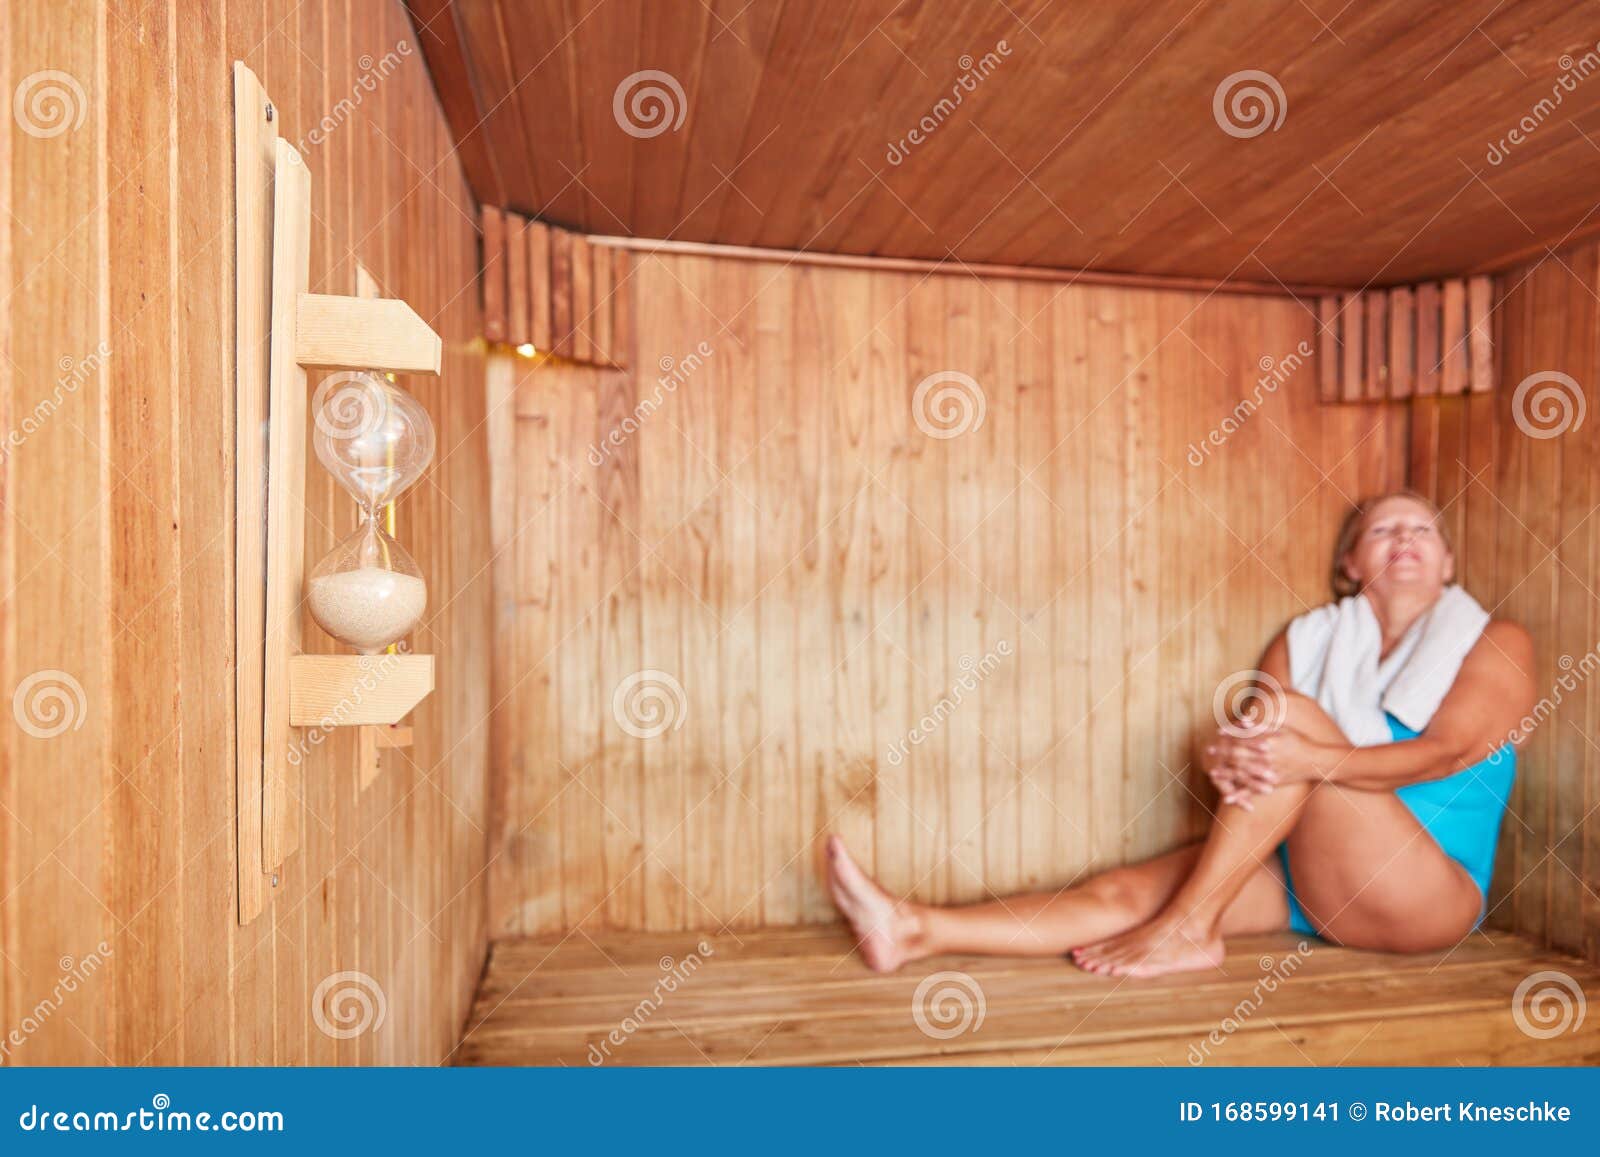 klimaat Kreet Eenheid Woman in the Sauna on a Wellness Vacation Stock Image - Image of senior,  body: 168599141